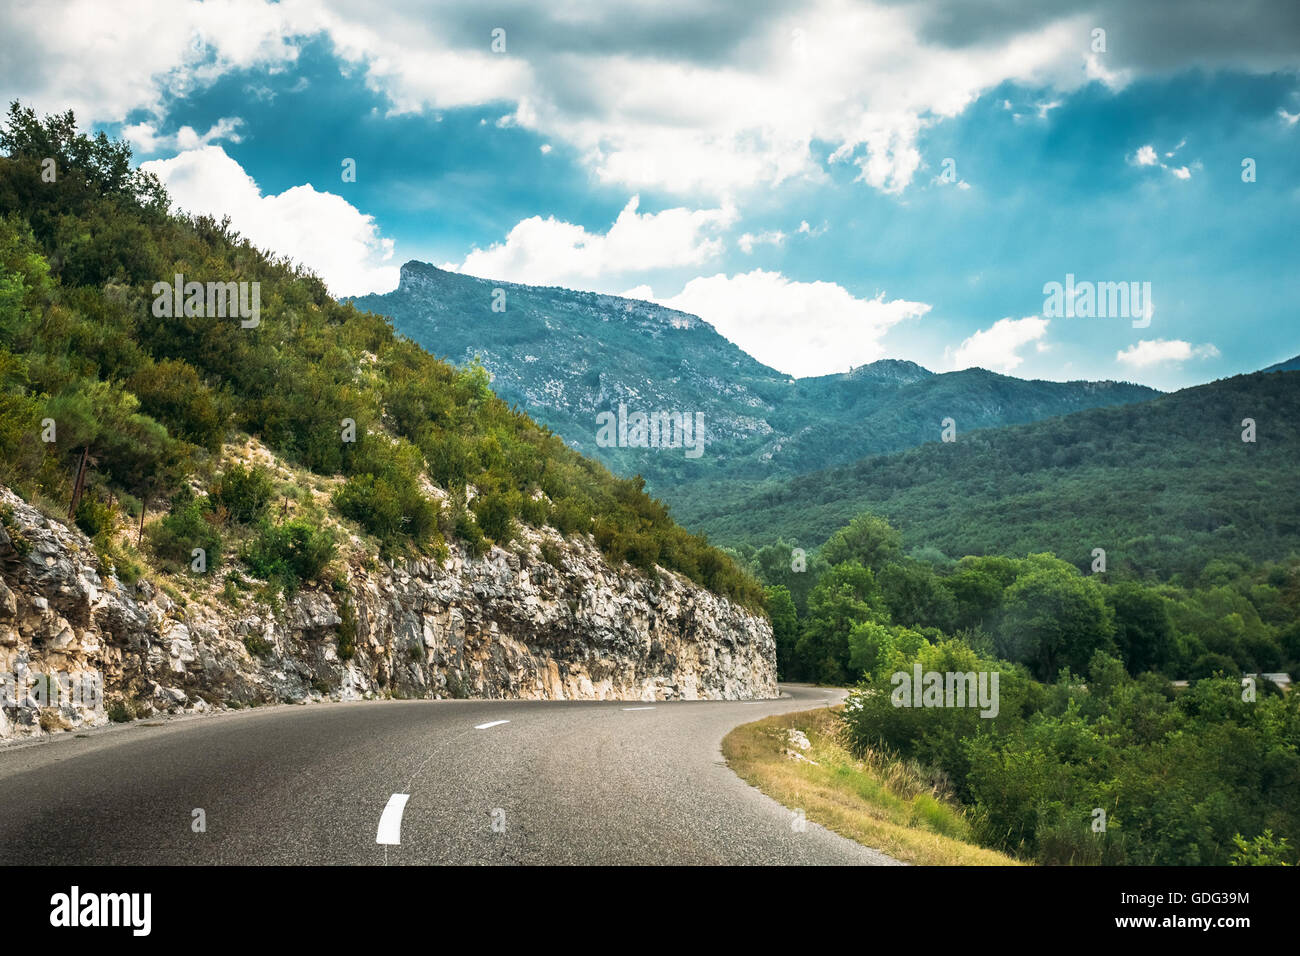 Beautiful Open Asphalt Mountain Road Under Sunny Blue Sky. Verdon Gorge In France. French Landscape Stock Photo